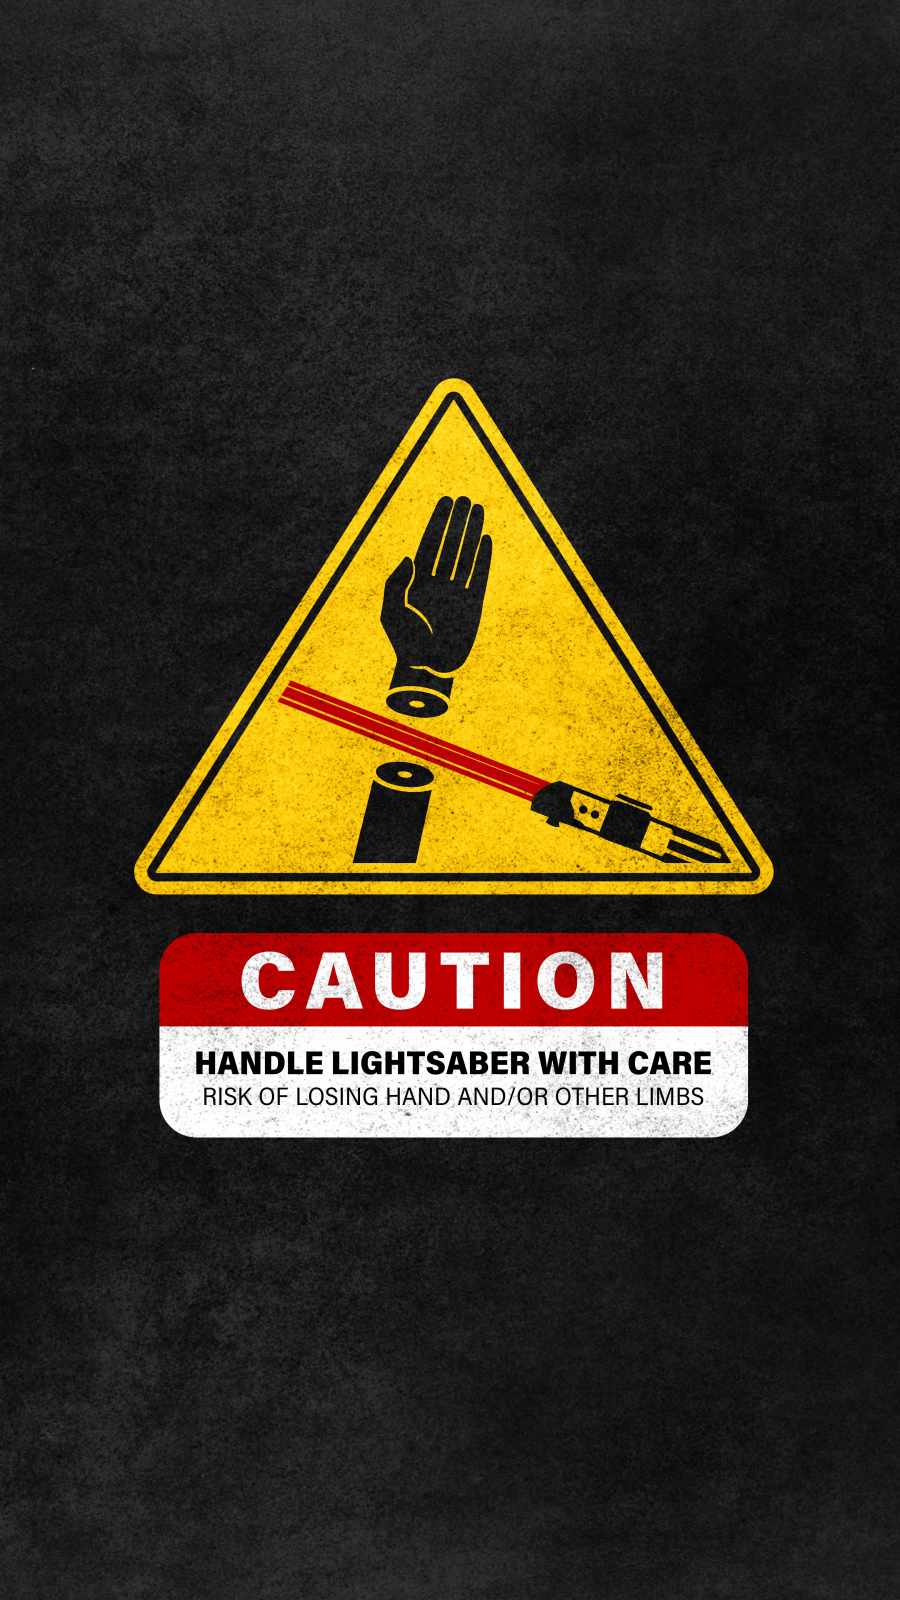 Lightsaber Caution